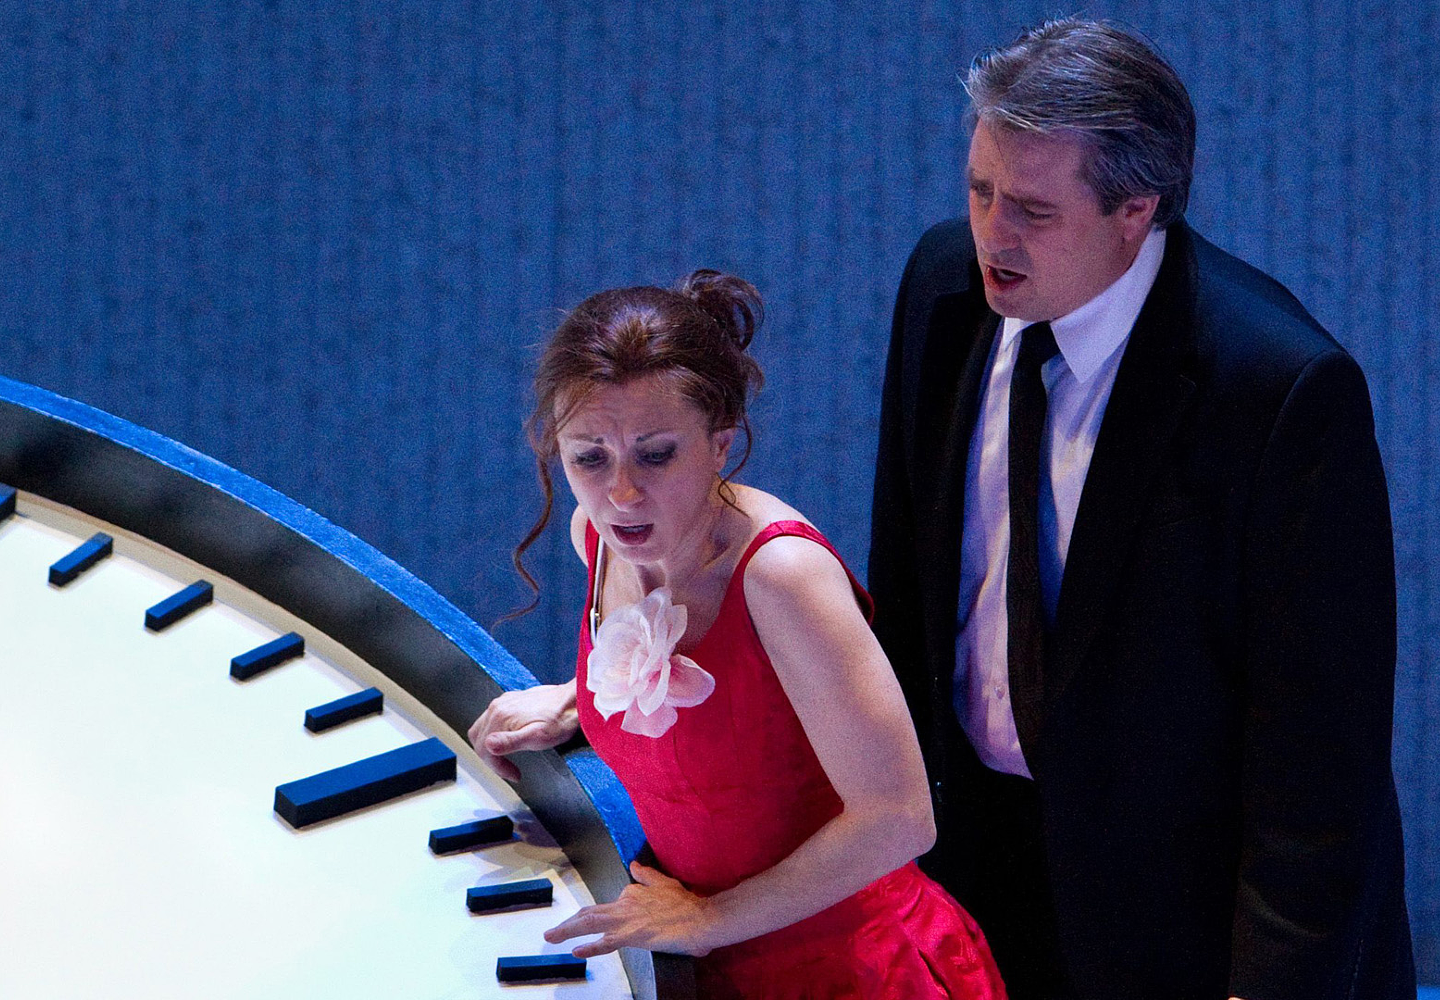 La Traviata – Nightly Met Opera streams